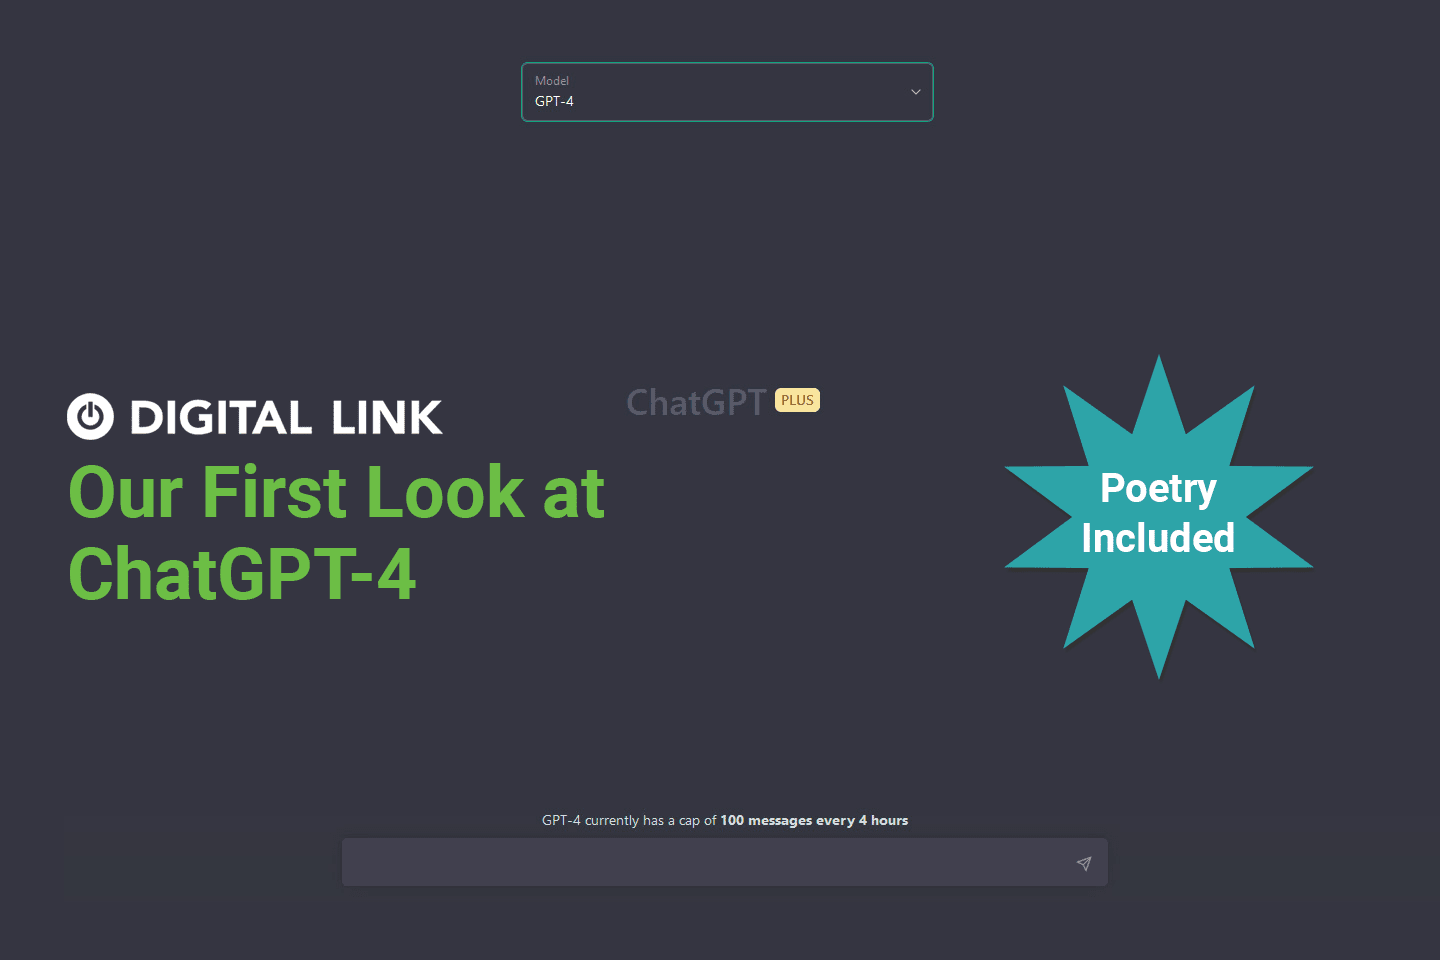 Digital Link's first look at ChatGPT-4, screenshot of browser